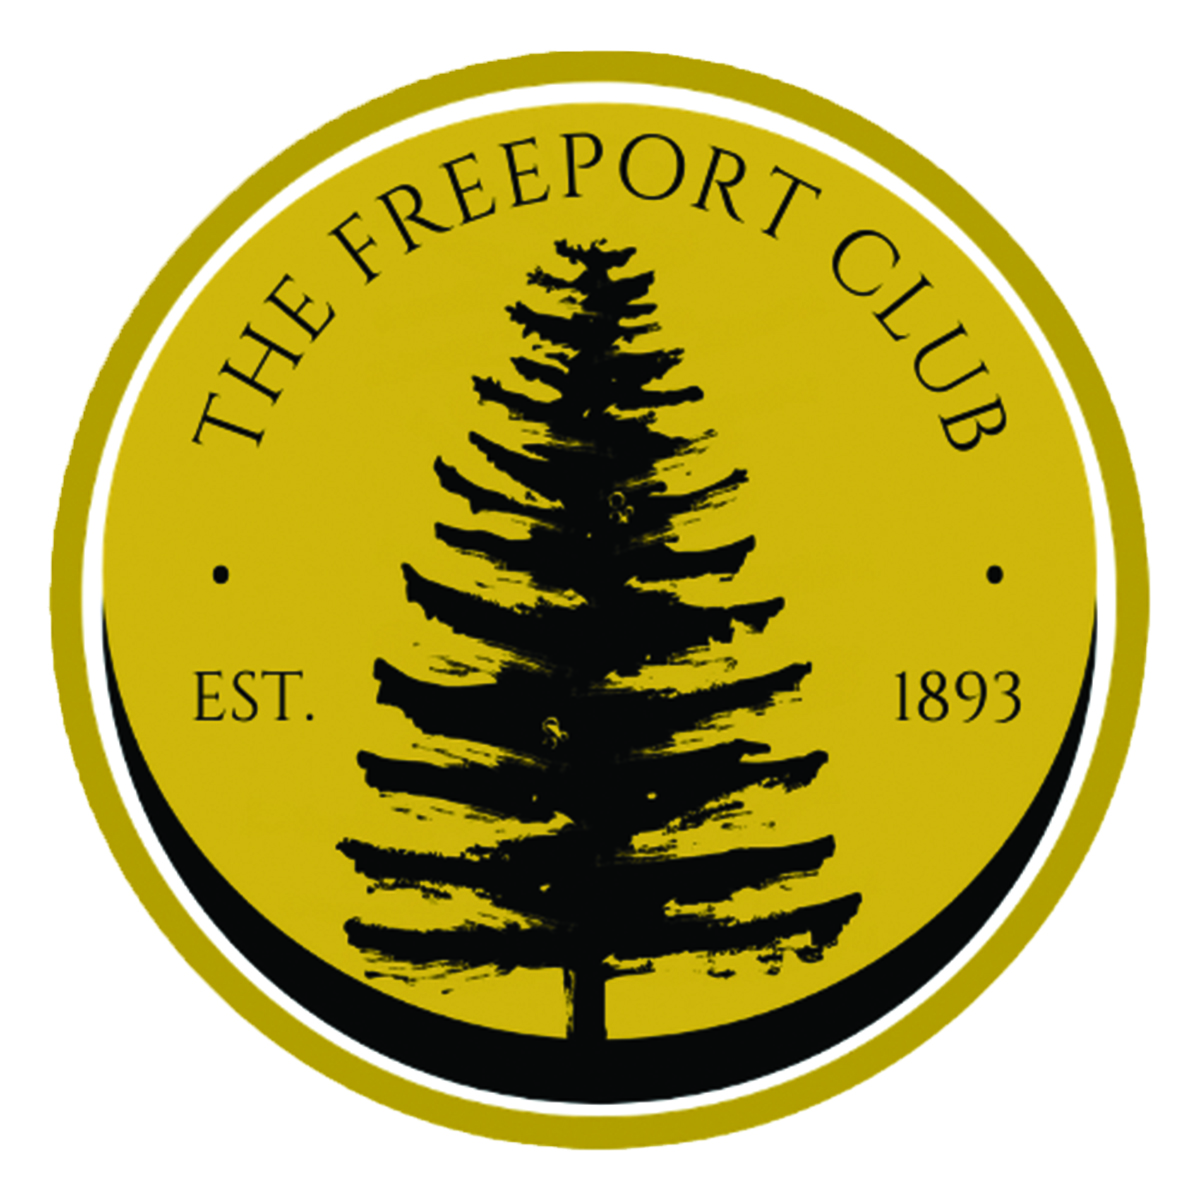 The Freeport Club